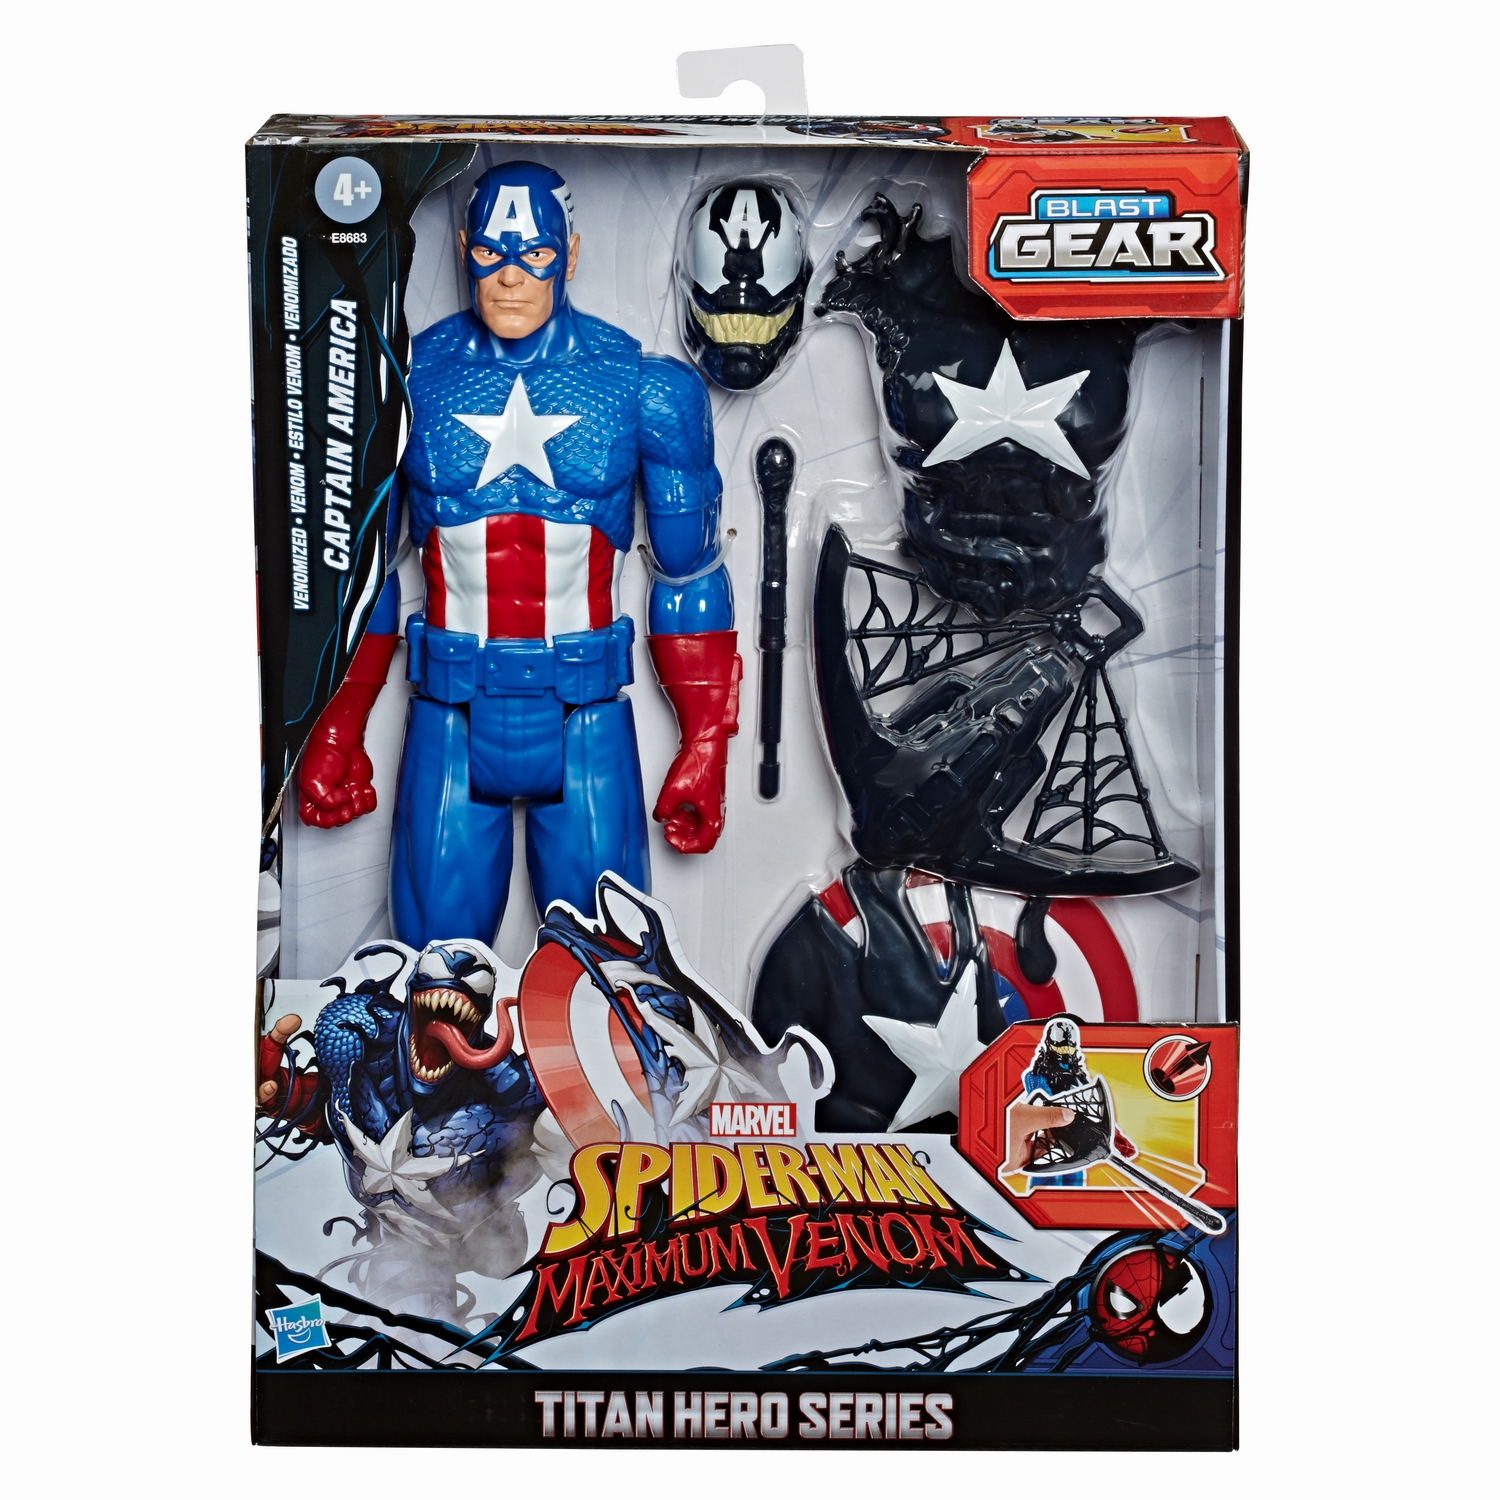 SPIDER-MAN MAX VENOM TITAN HERO BLAST GEAR VENOMIZED CAPTAIN AMERICA Figure - in pck.jpg